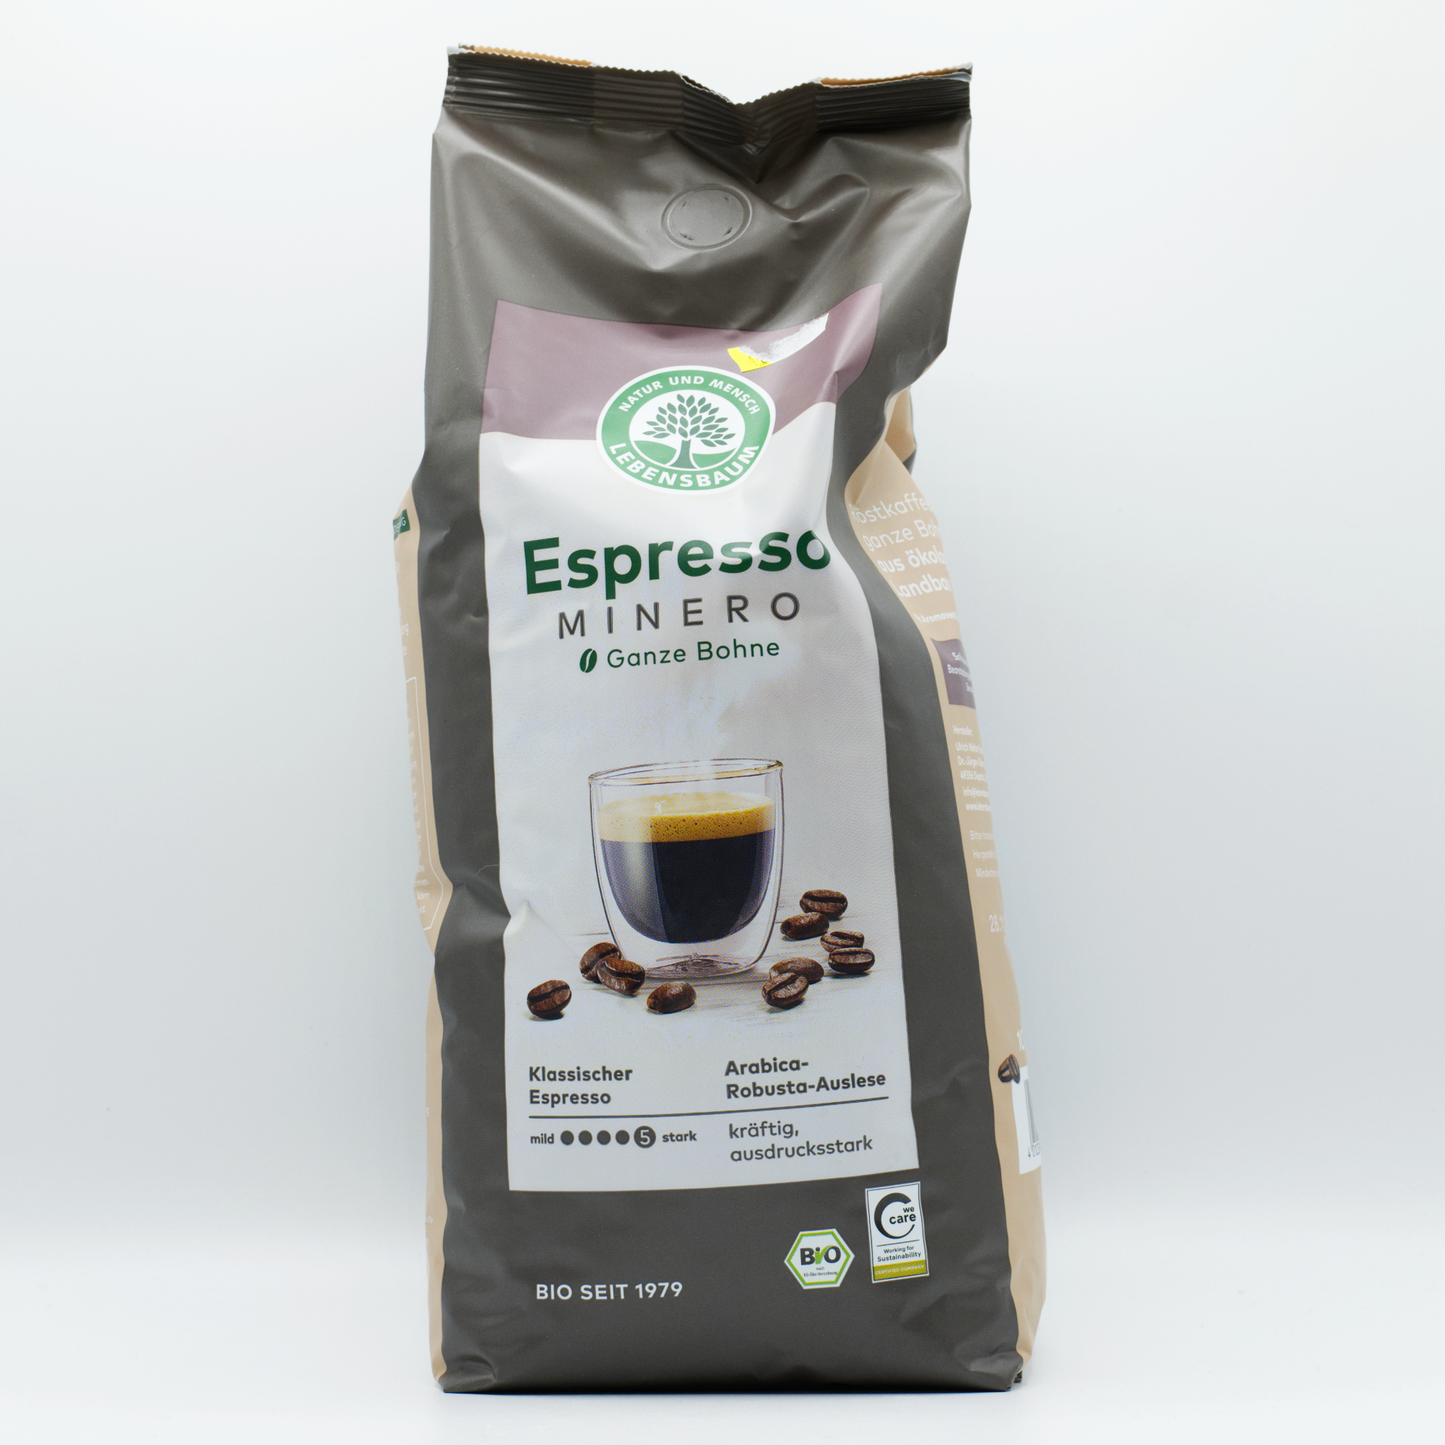 Espresso Minero Ganze Bohne, 1kg Lebensbaum